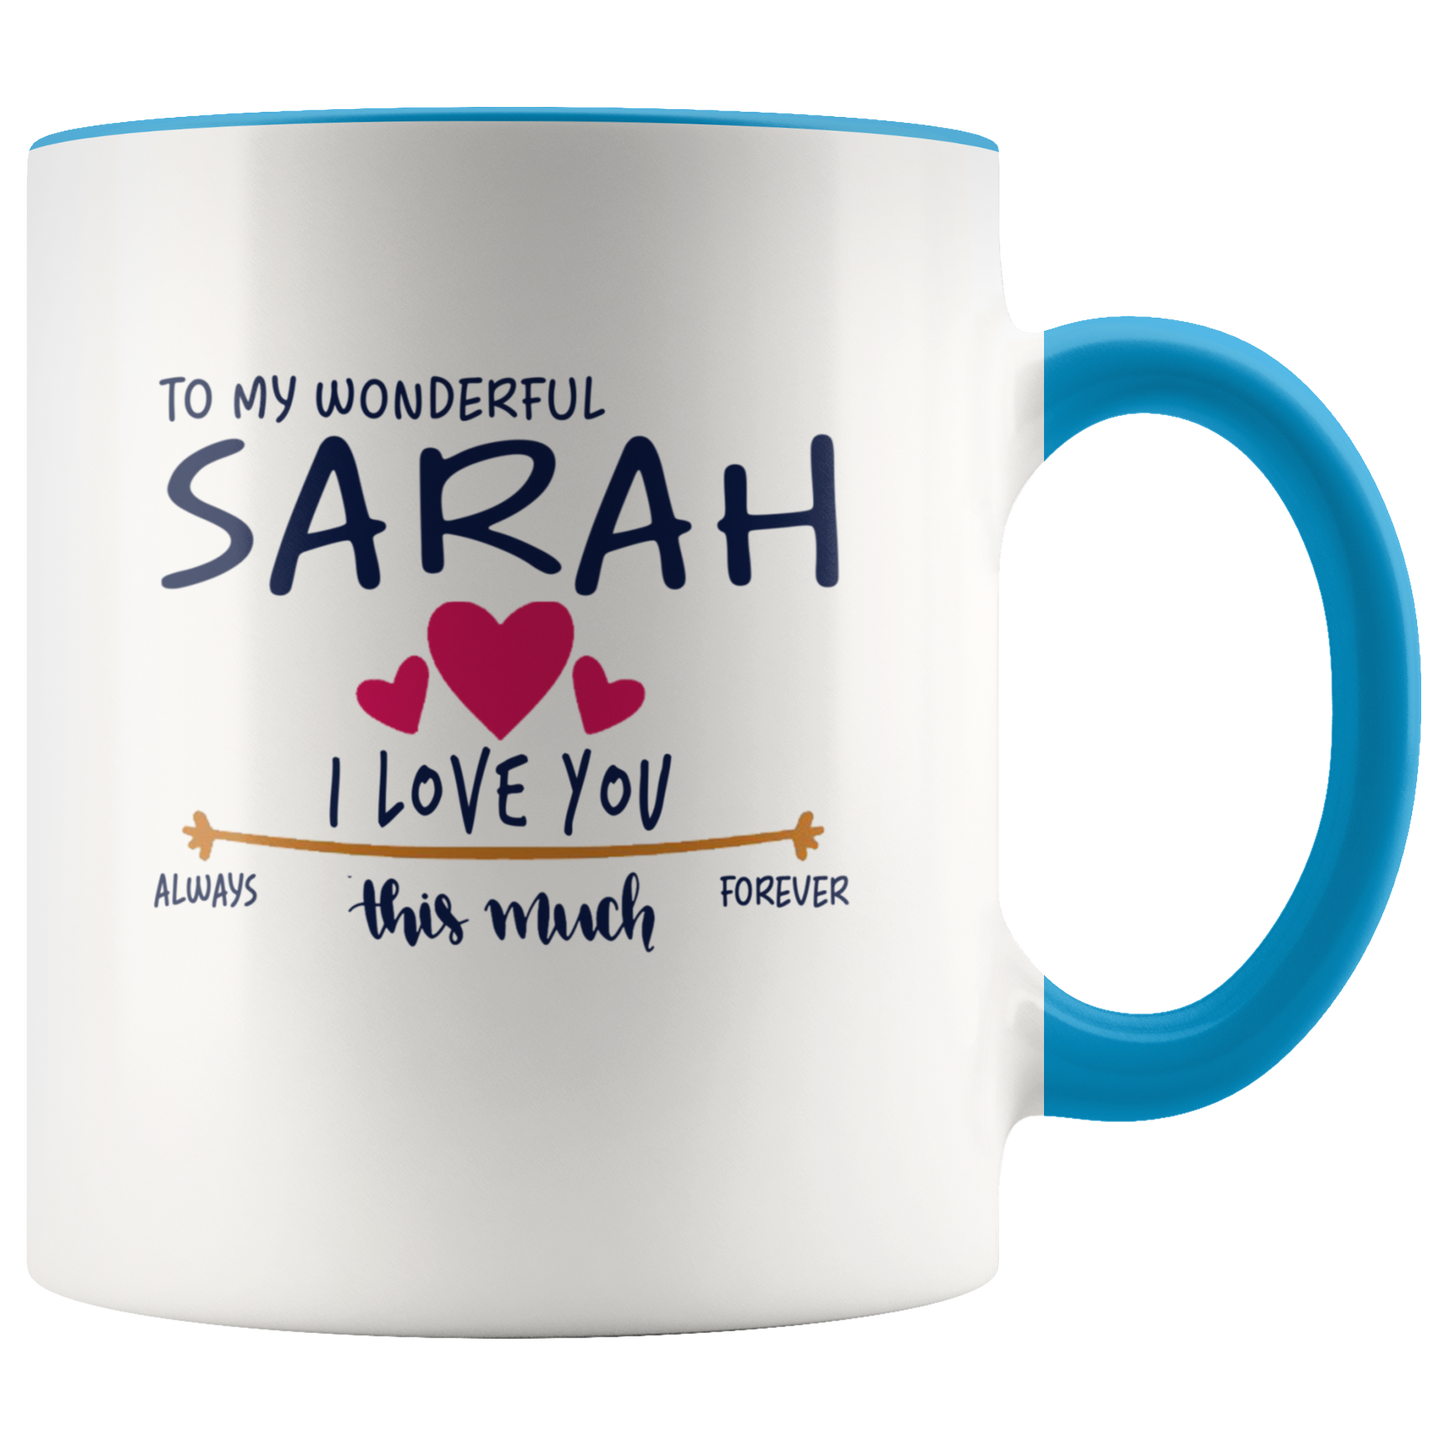 M-21258935-sp-22731 - Valentines Day Coffee Mug With Name Sarah - To My Wonderful